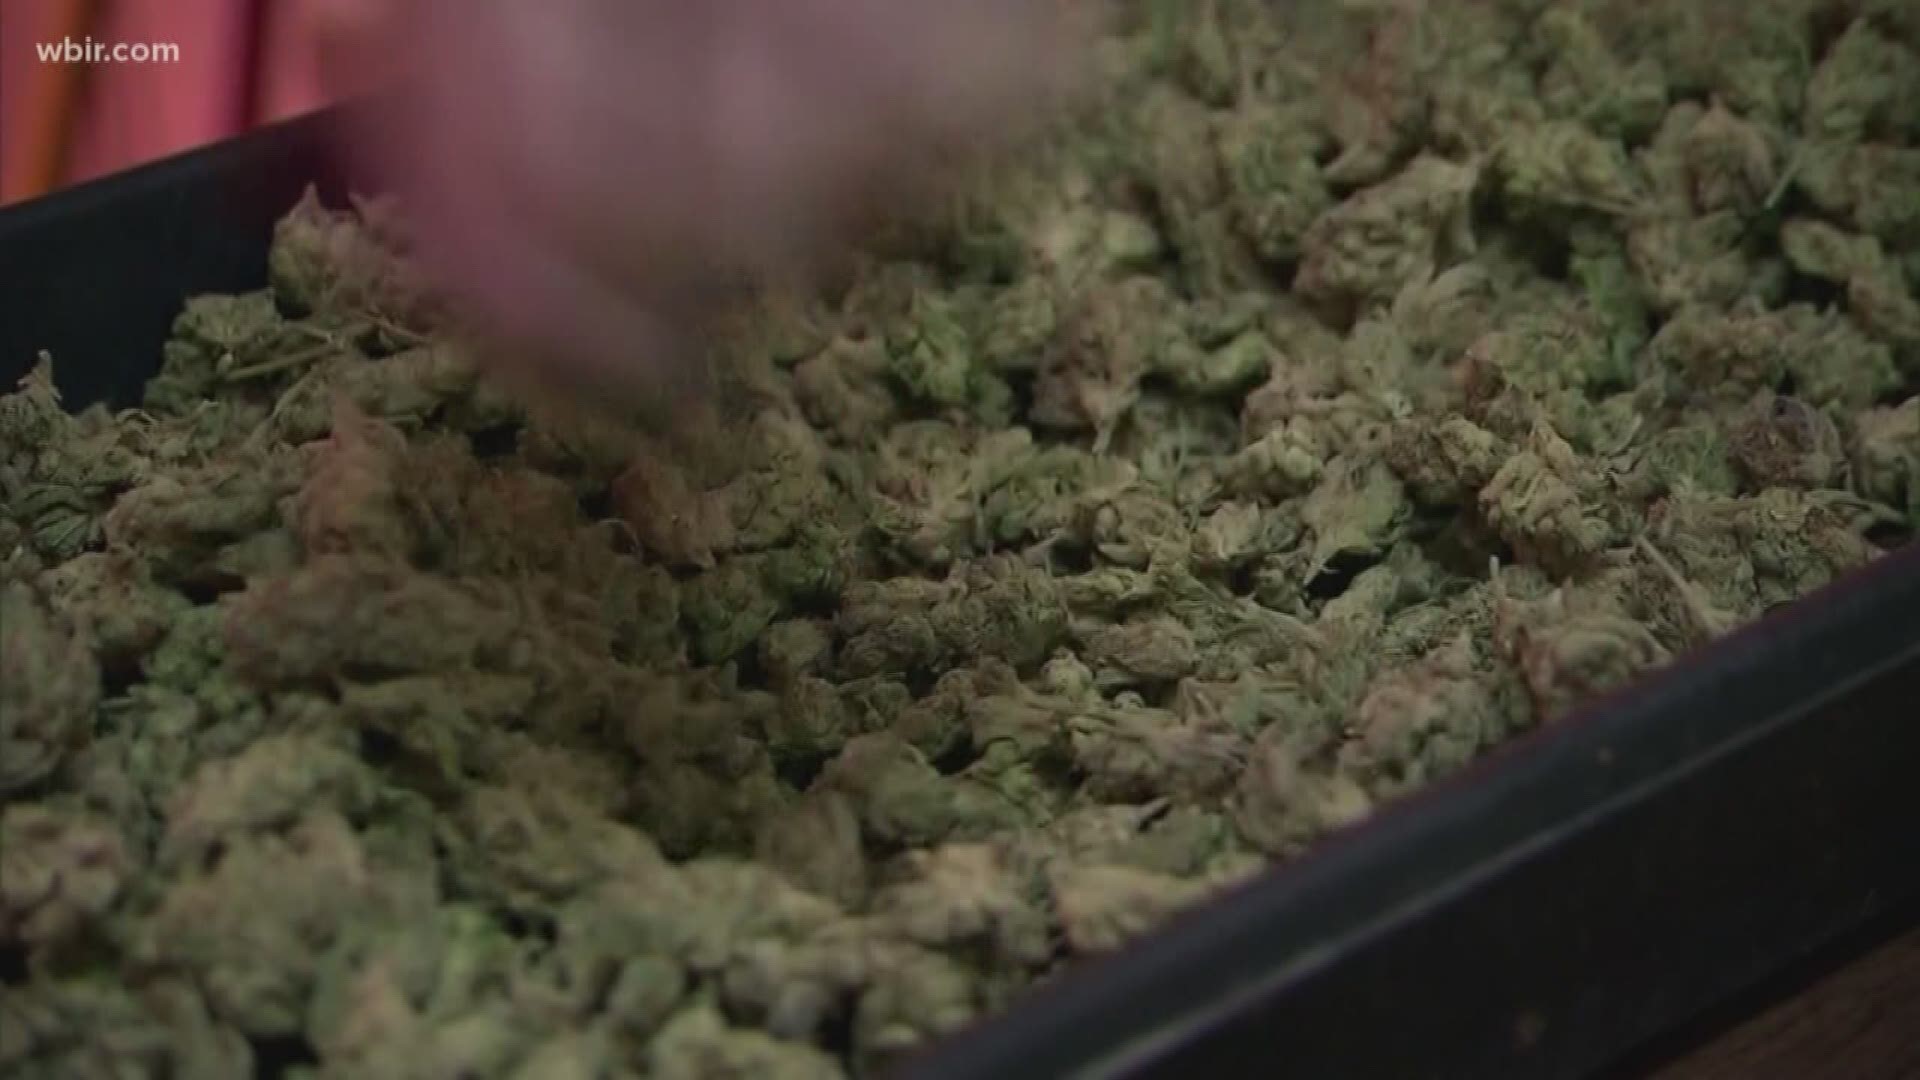 TN Congressman Tim Burchett says U.S. lawmakers talked about the impact of legalizing marijuana recently.